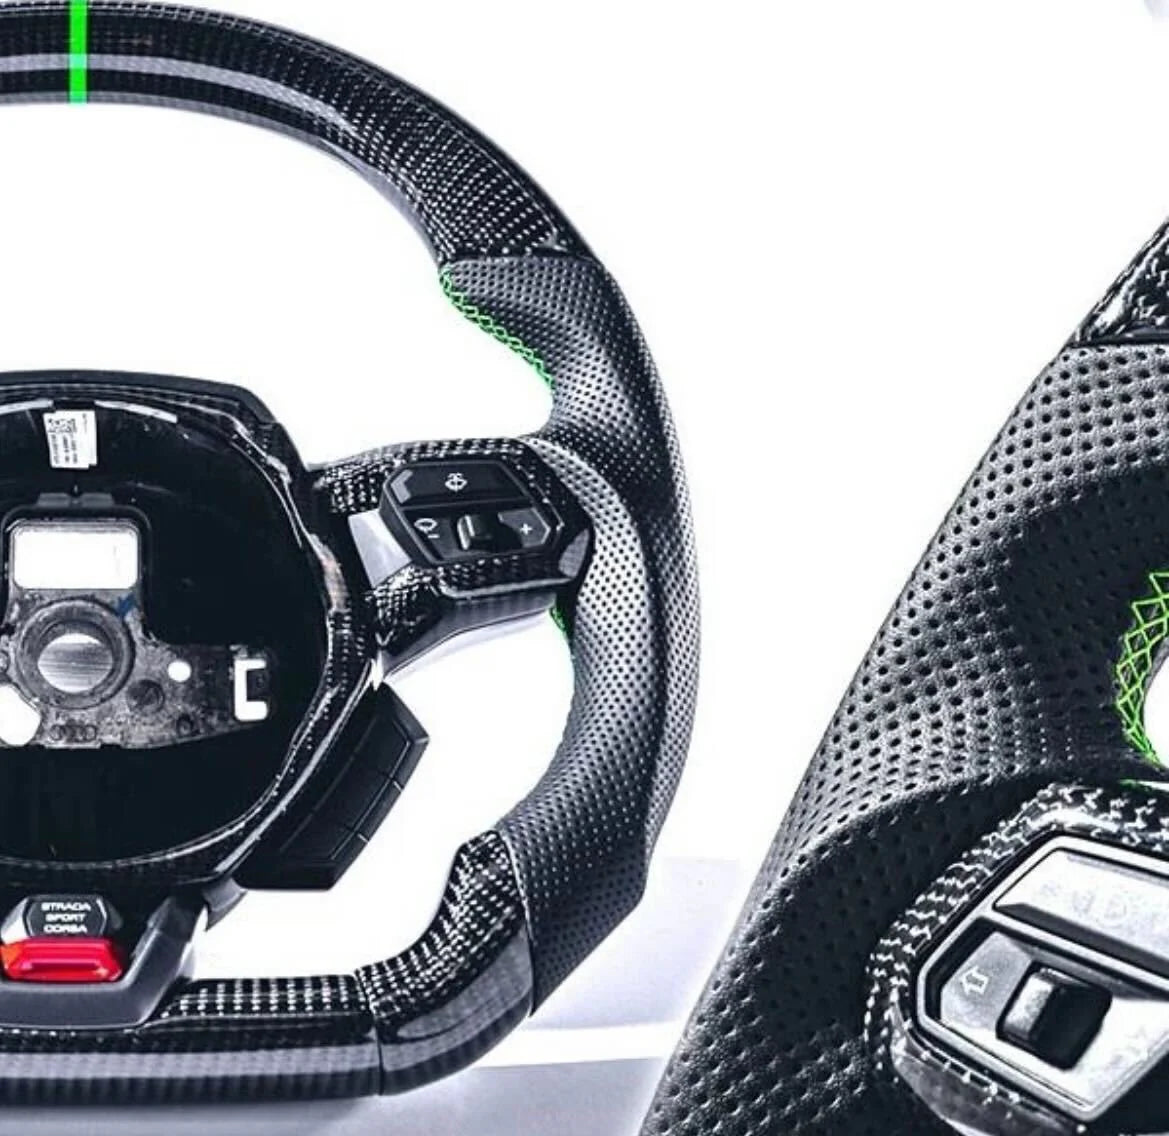 Lamborghini - Carbon Fiber Steering Wheel (Custom)